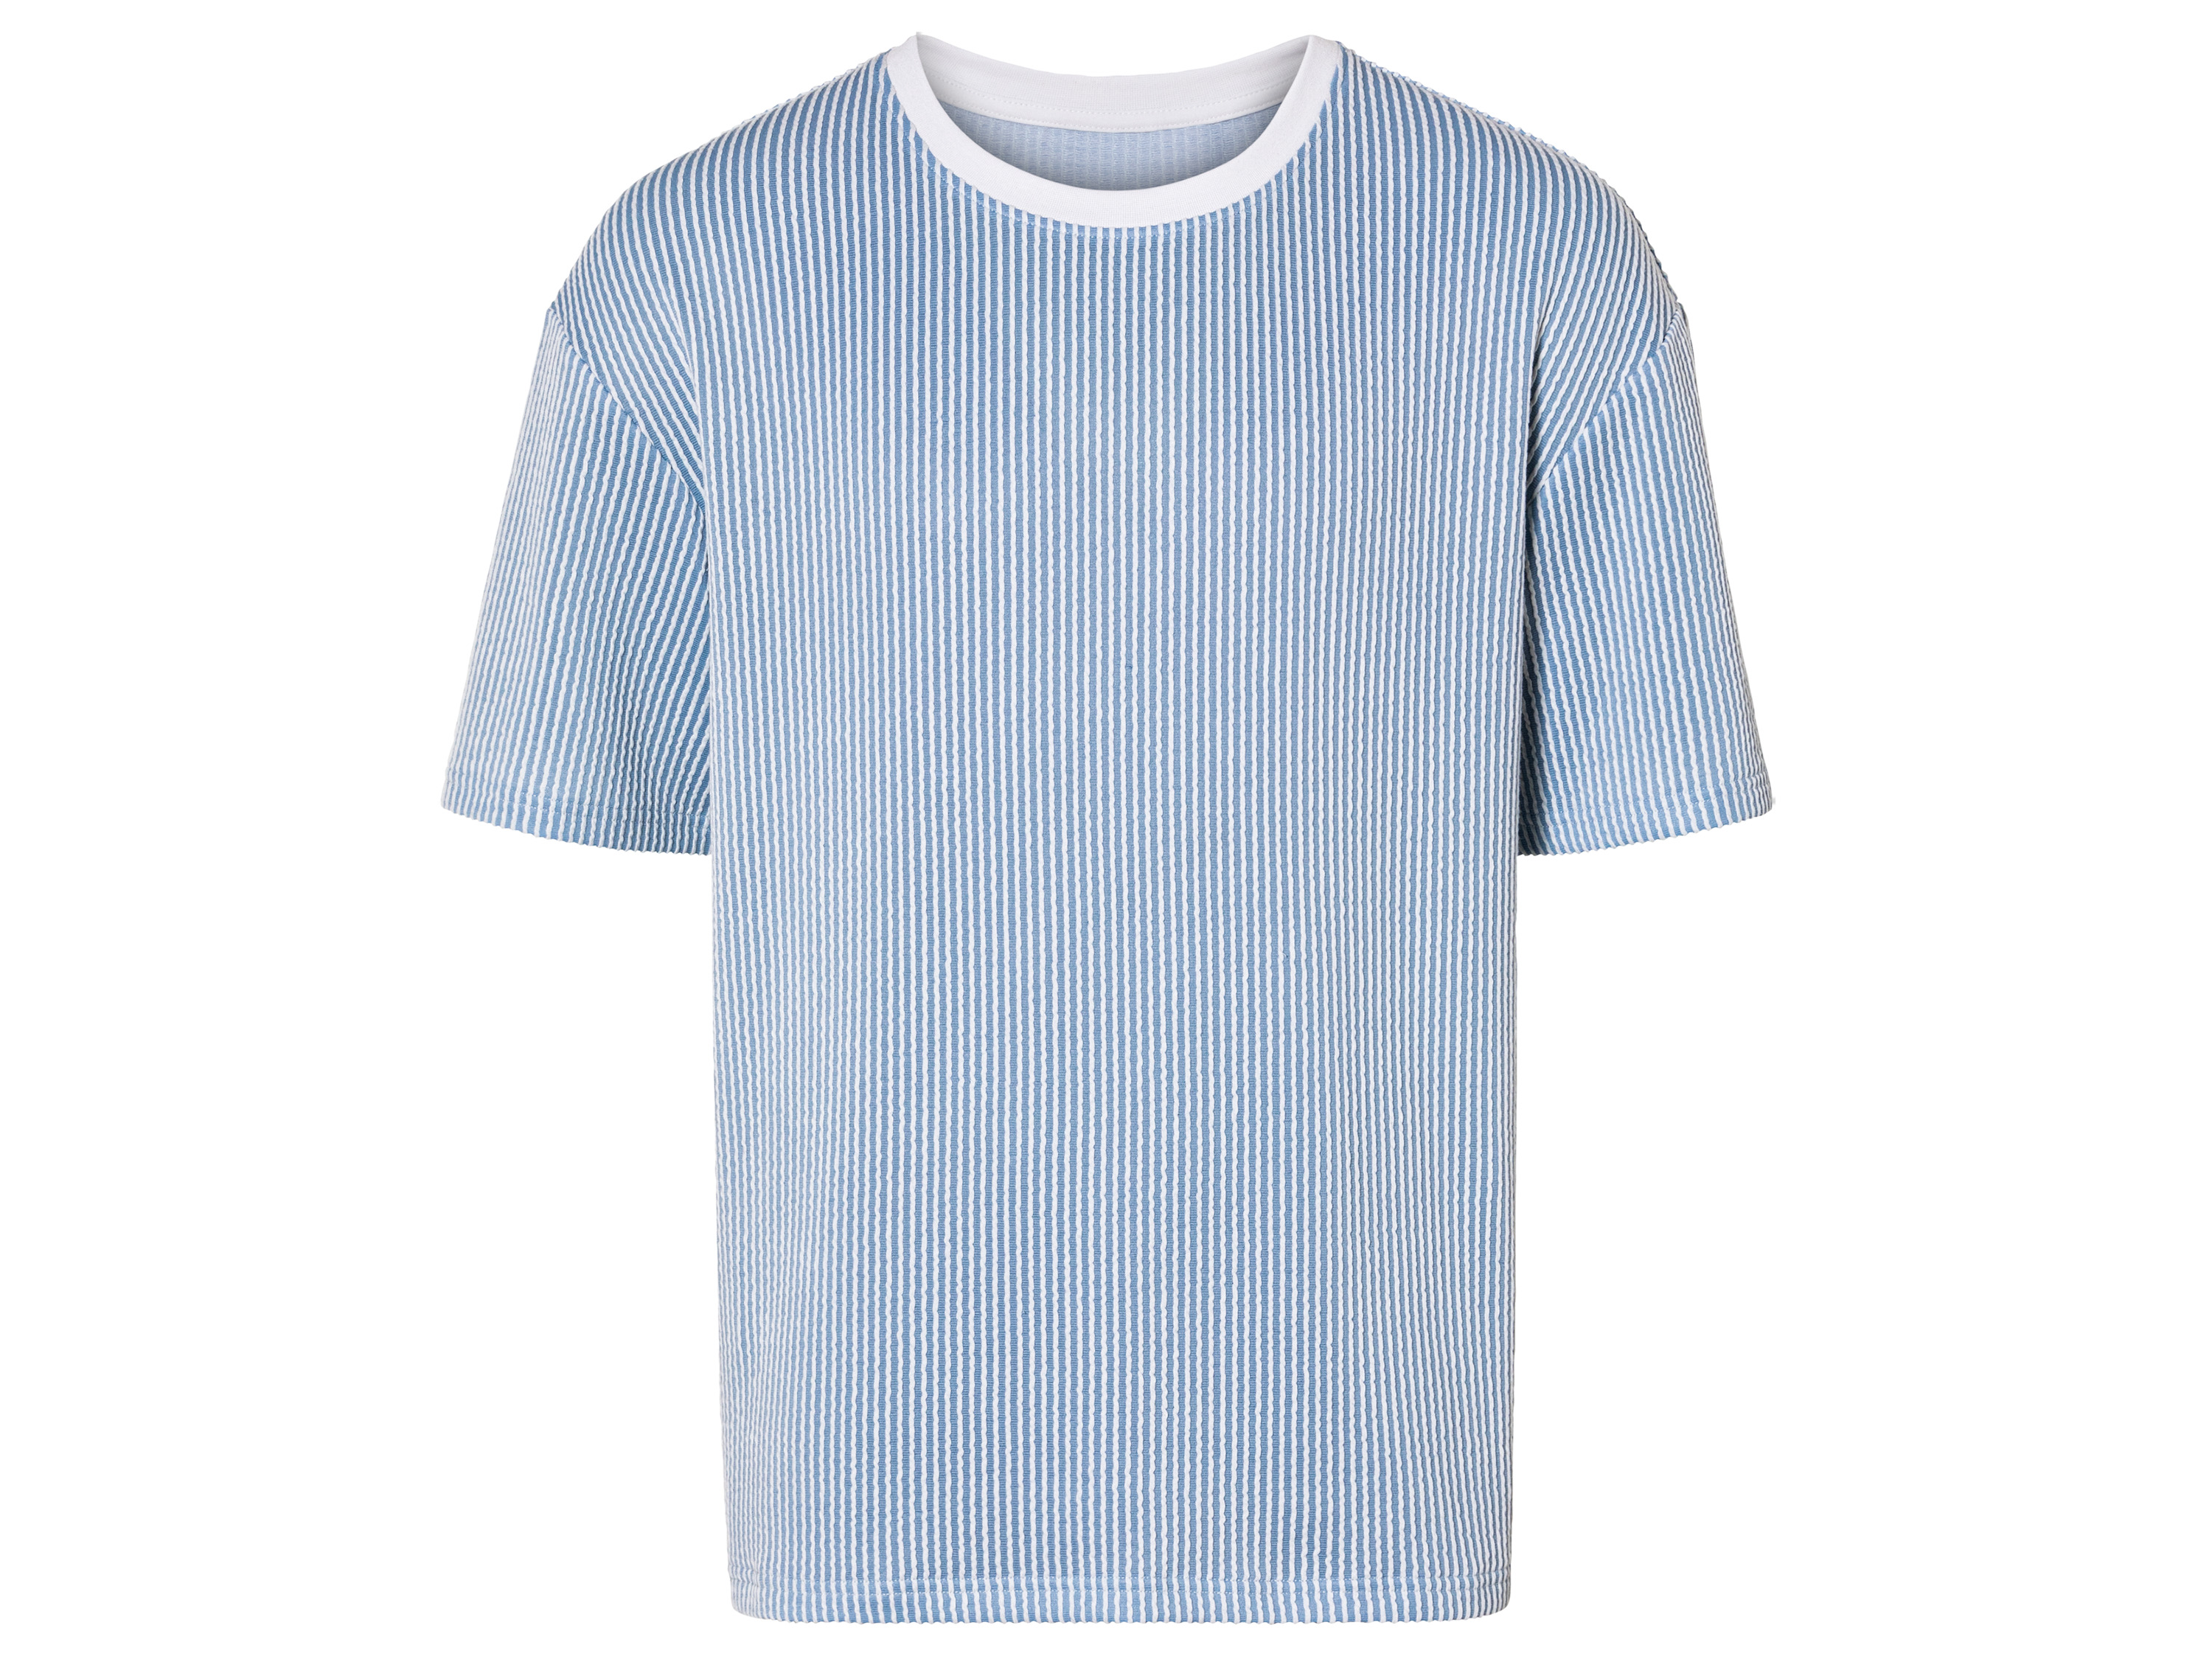 LIVERGY Heren T-shirt (L (52/54), Blauw/wit)